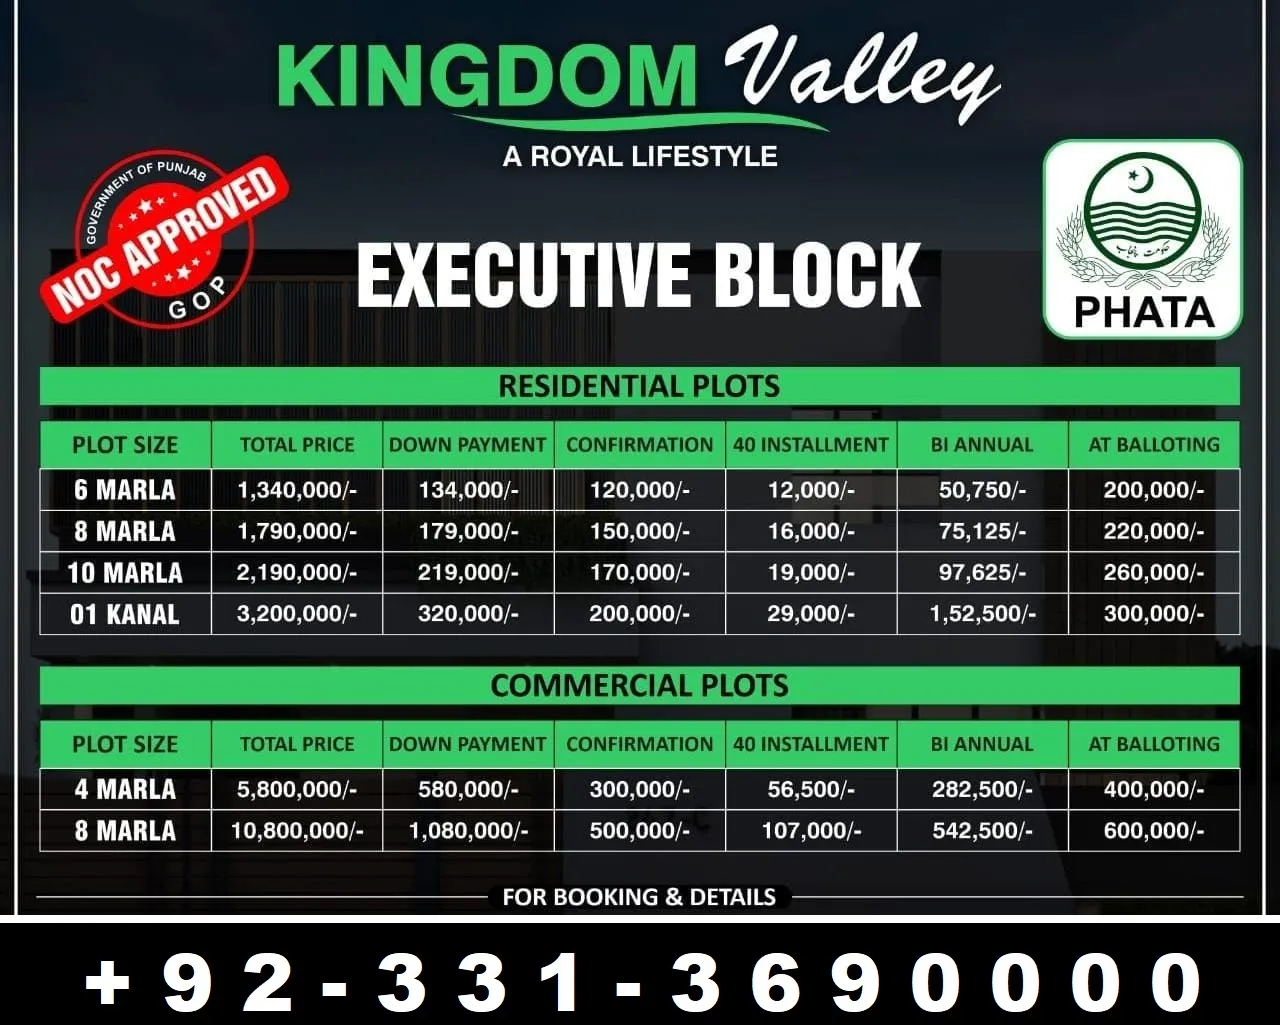 Kingdom Valley Executive Block Payment Plan